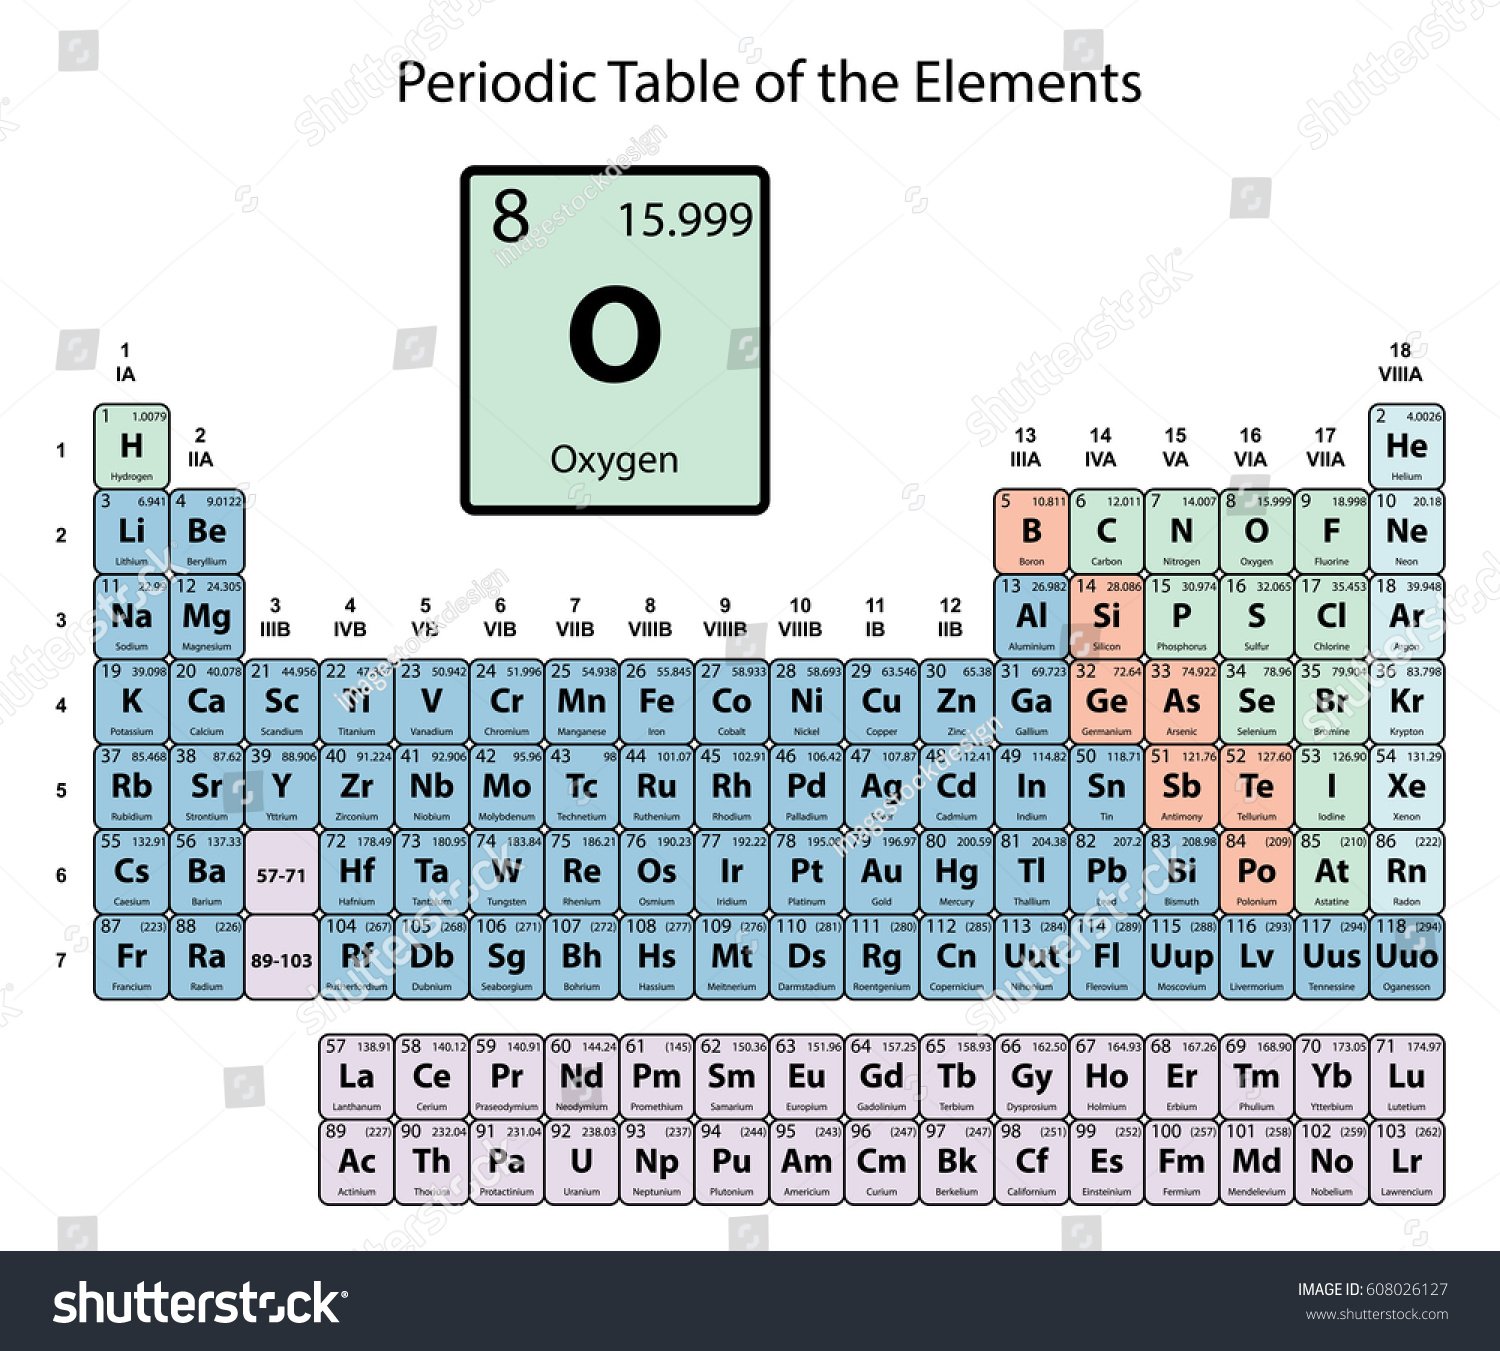 Atomic no of oxygen elements